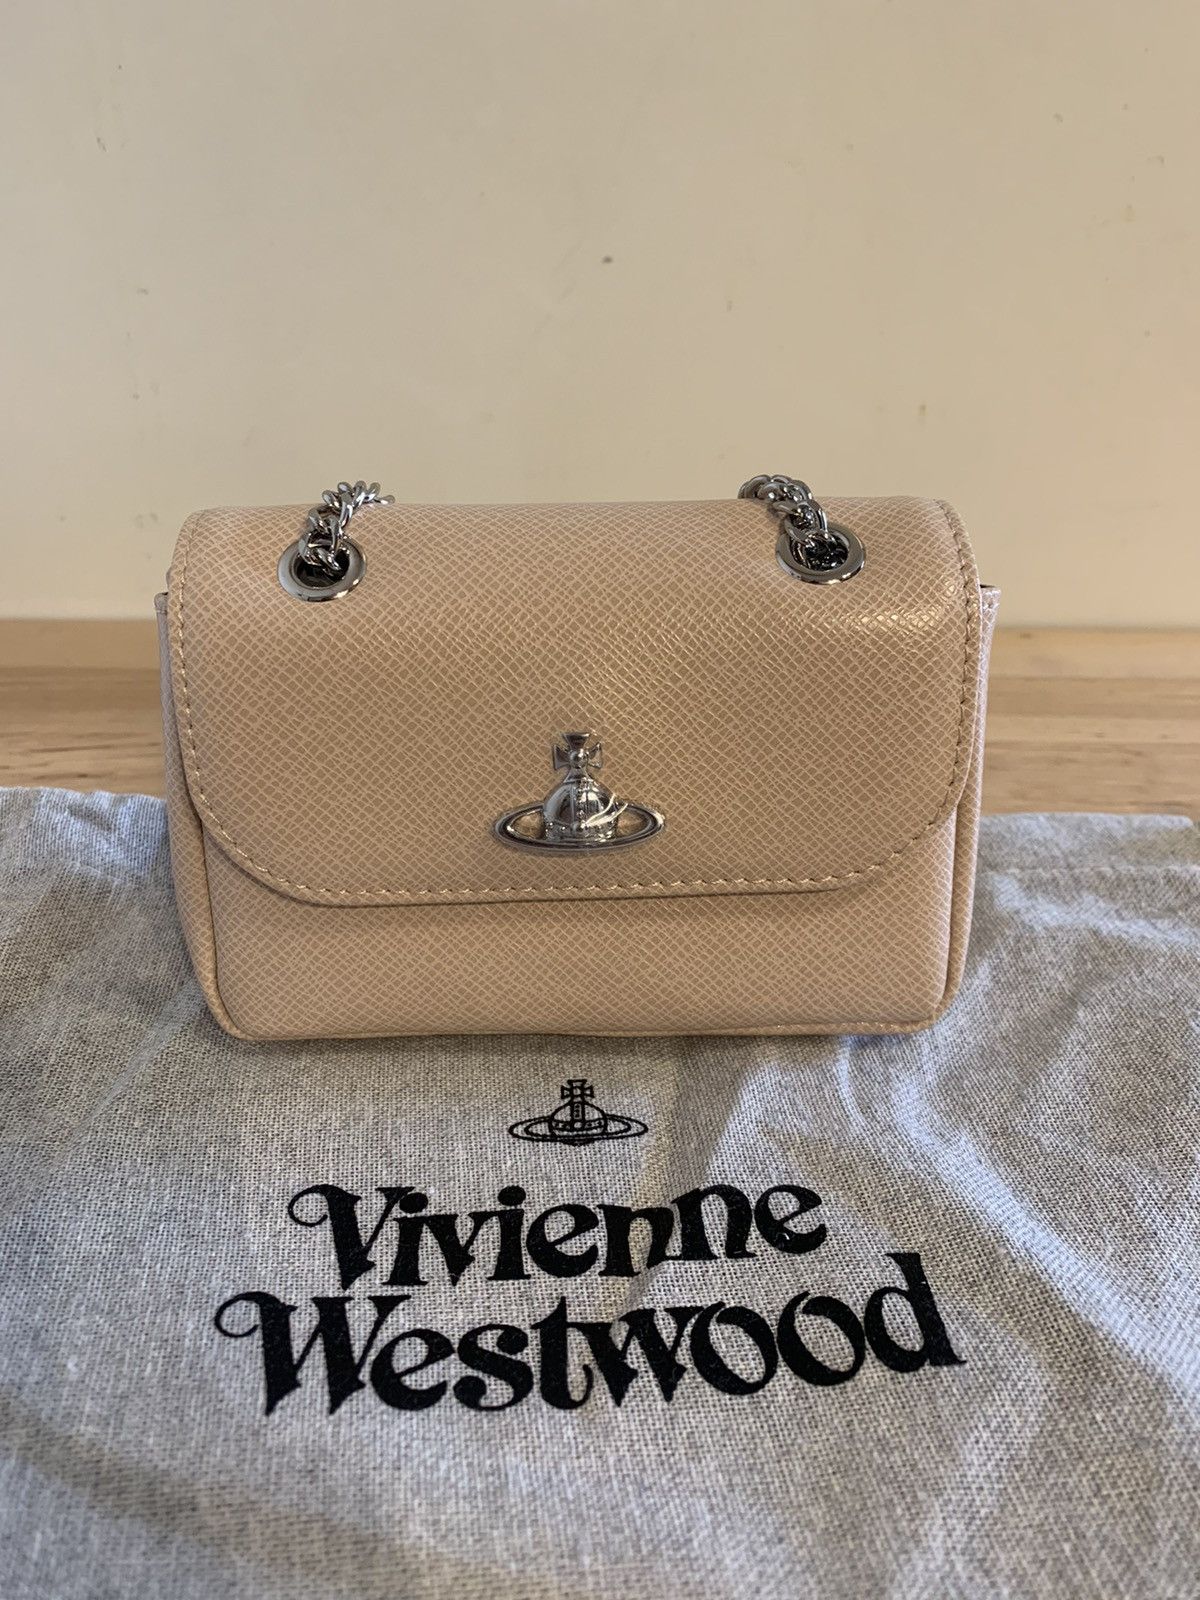 Vivienne Westwood Vivienne Westwood Chain Bag Made in Italy | Grailed